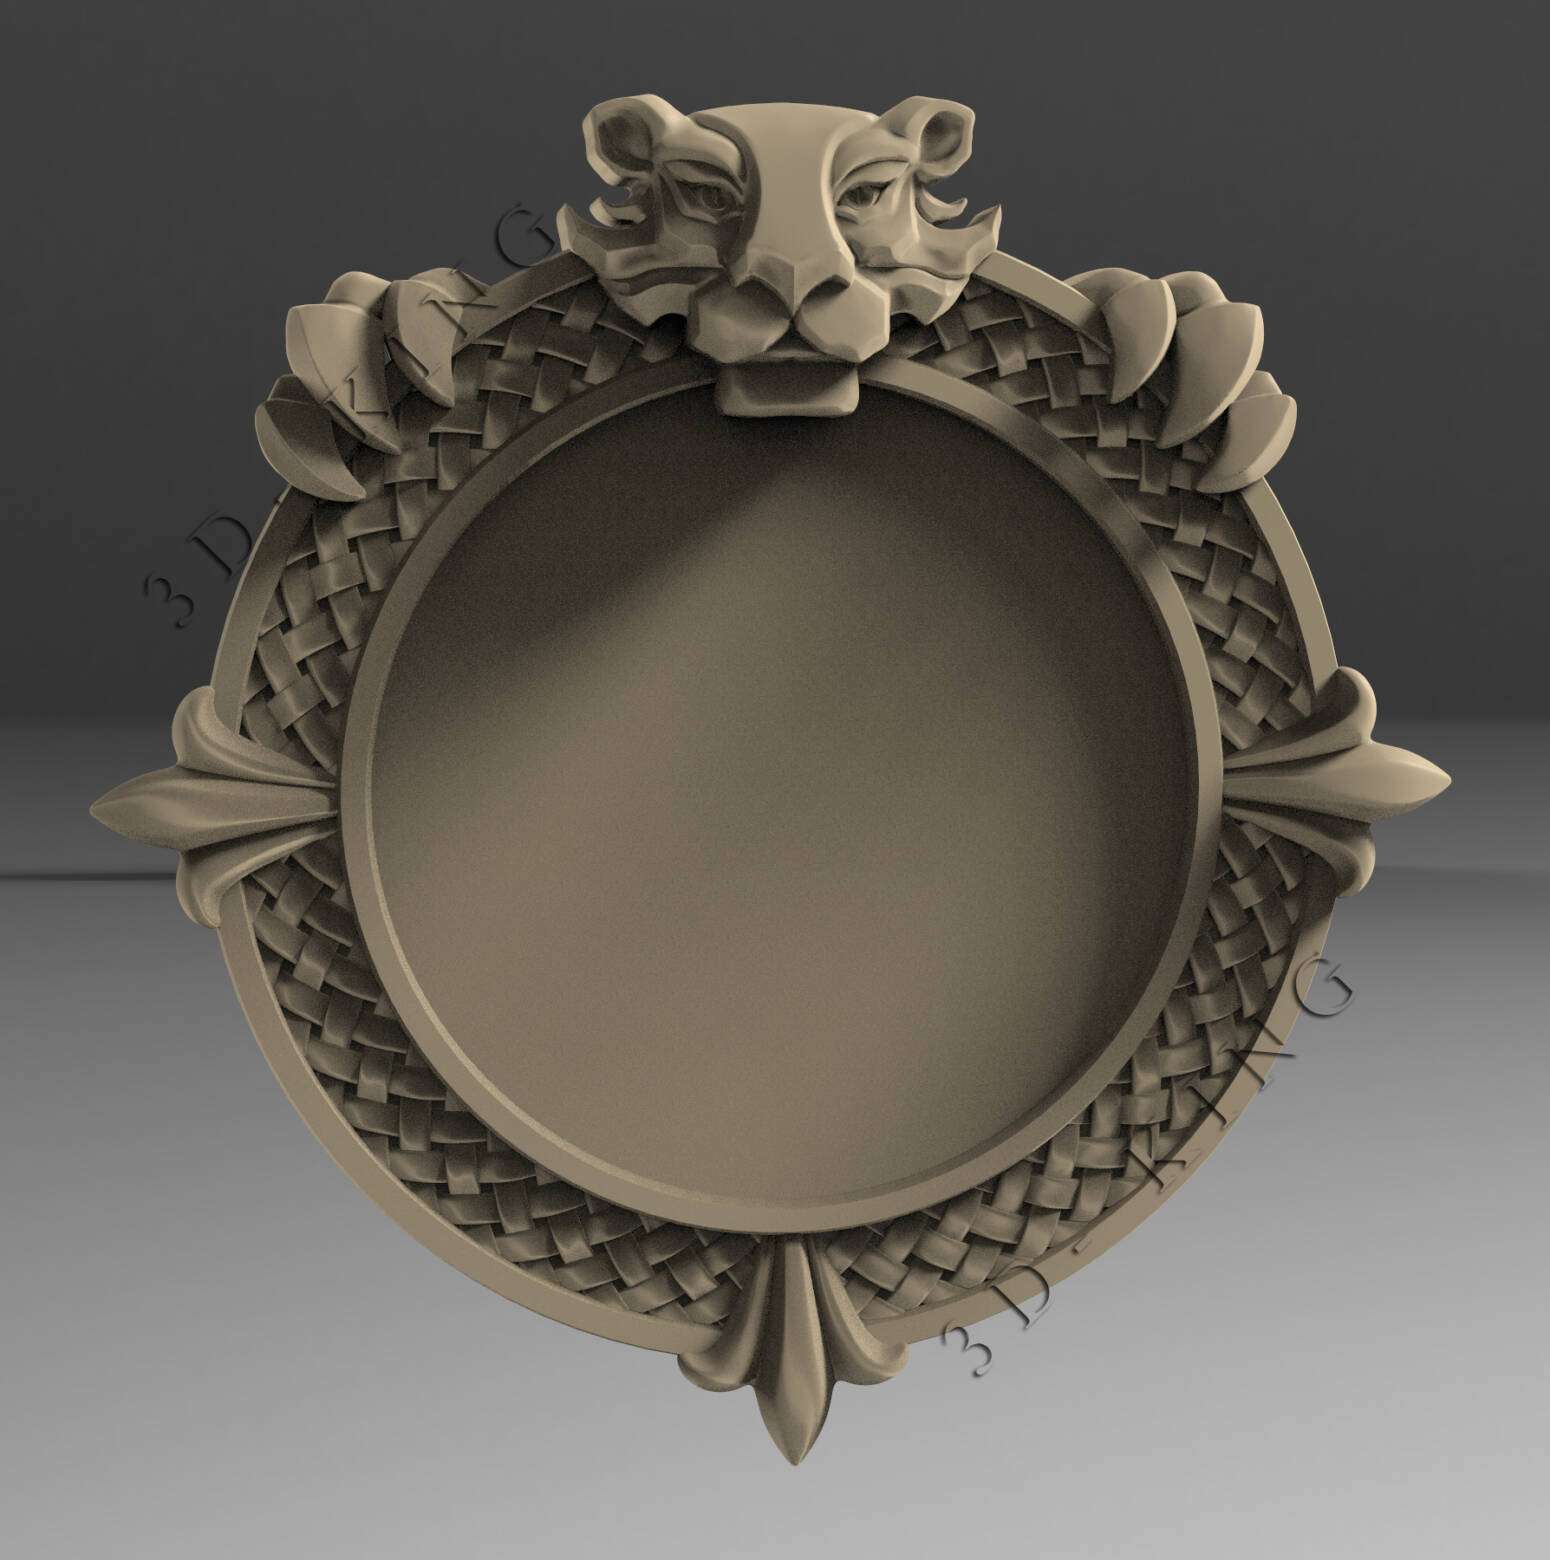 stl 3d models 50+ circle frames set for cnc router aspire artcam engraver carving